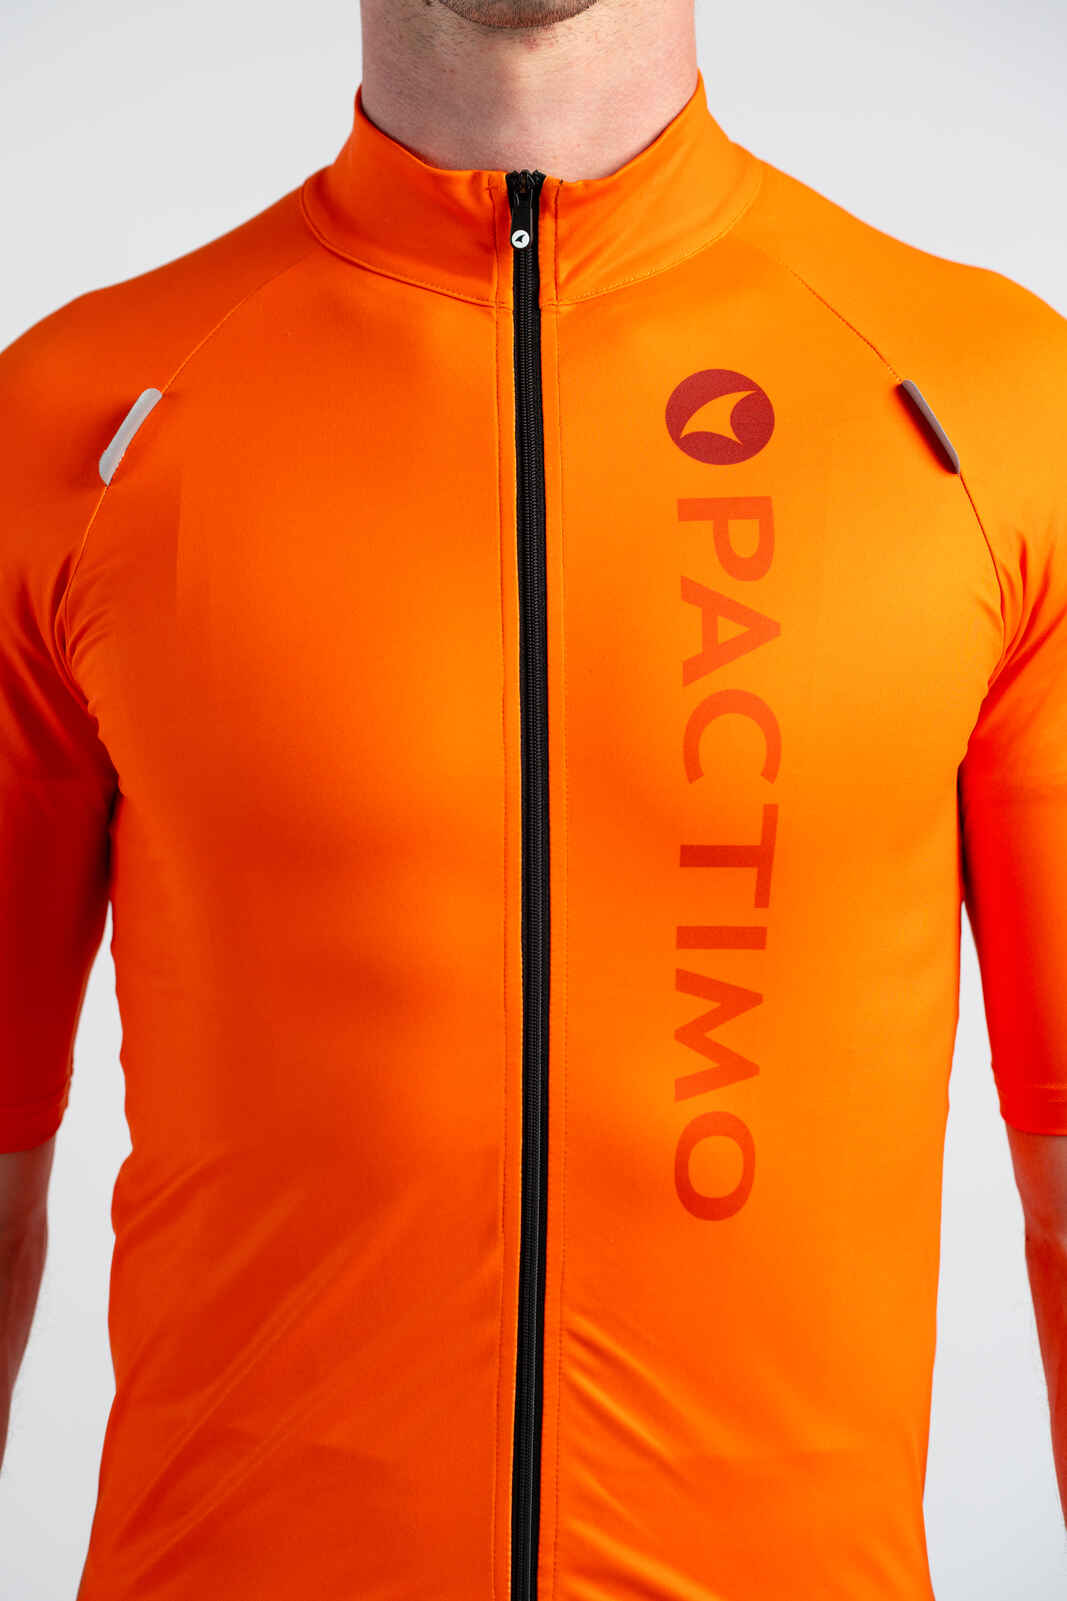 Men's Red/Orange Water Resistant Cycling Jersey - Front Zipper